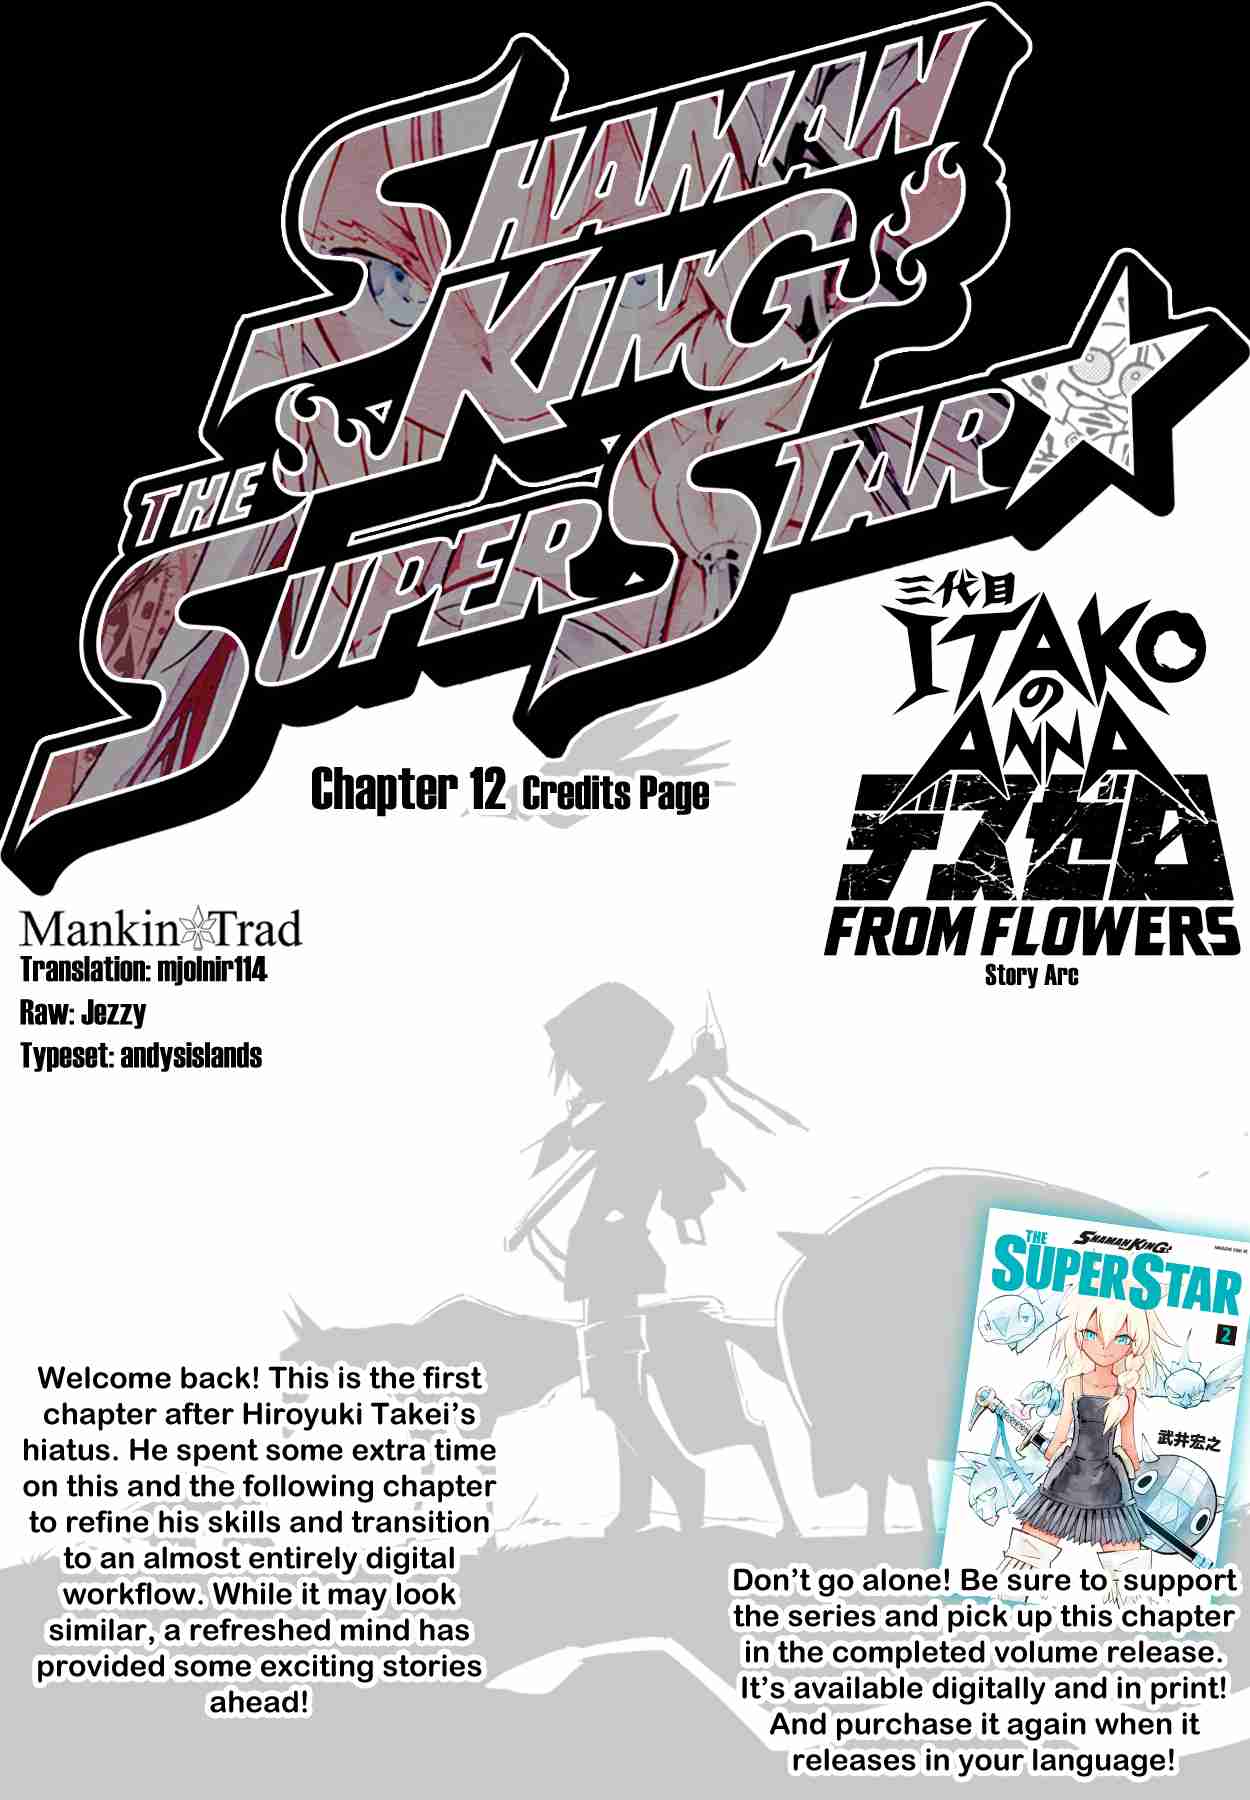 Shaman King: The Super Star Vol. 2 Ch. 12 Patch Girl